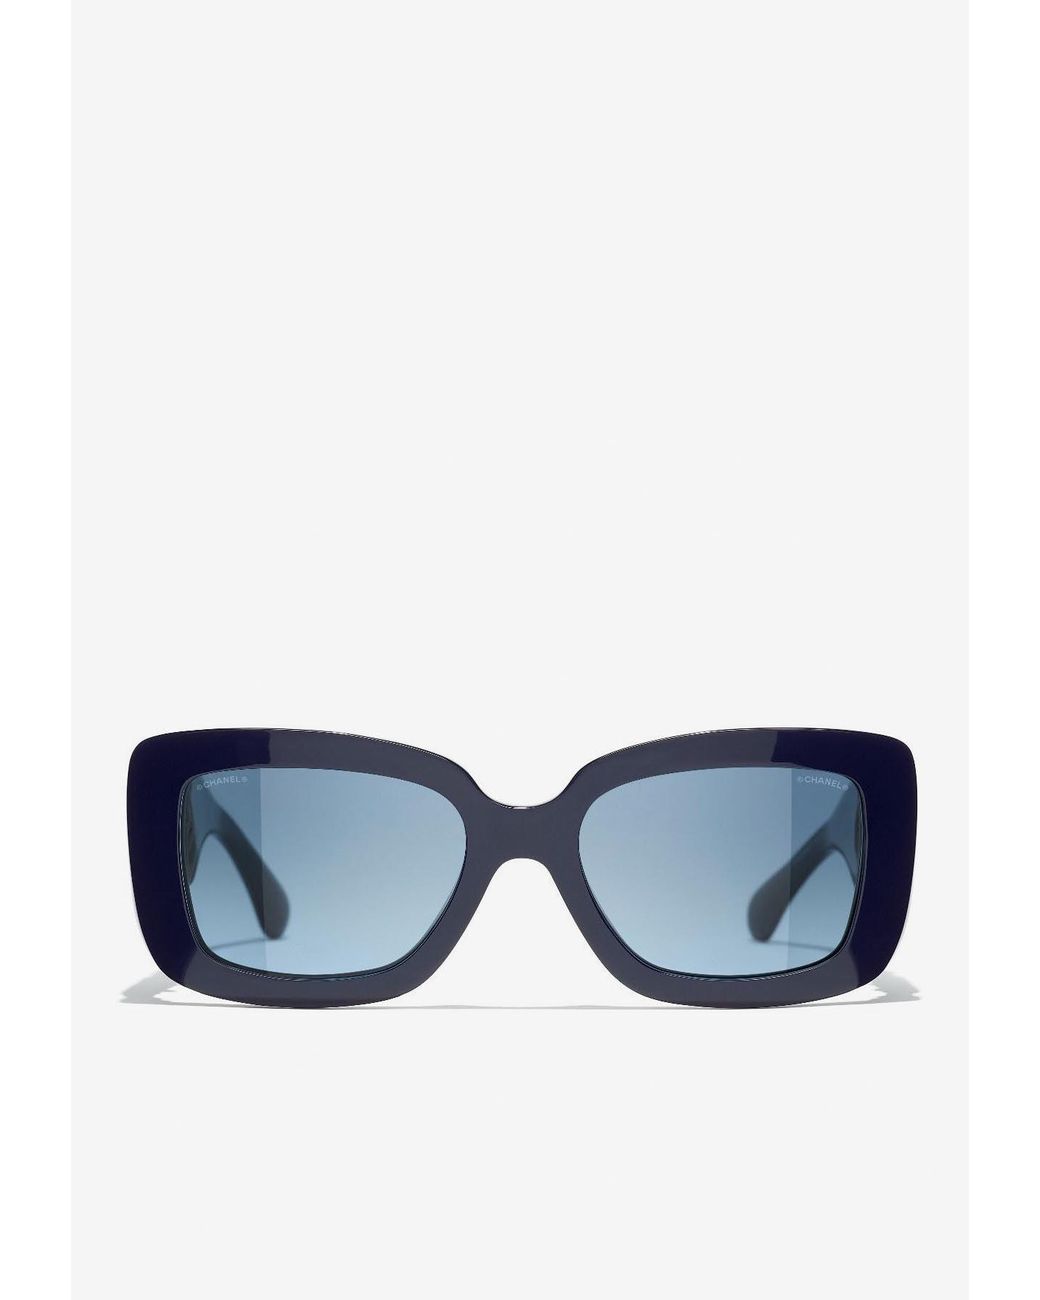 Chanel 5465Q 1462S2 Sunglasses  Pretavoir